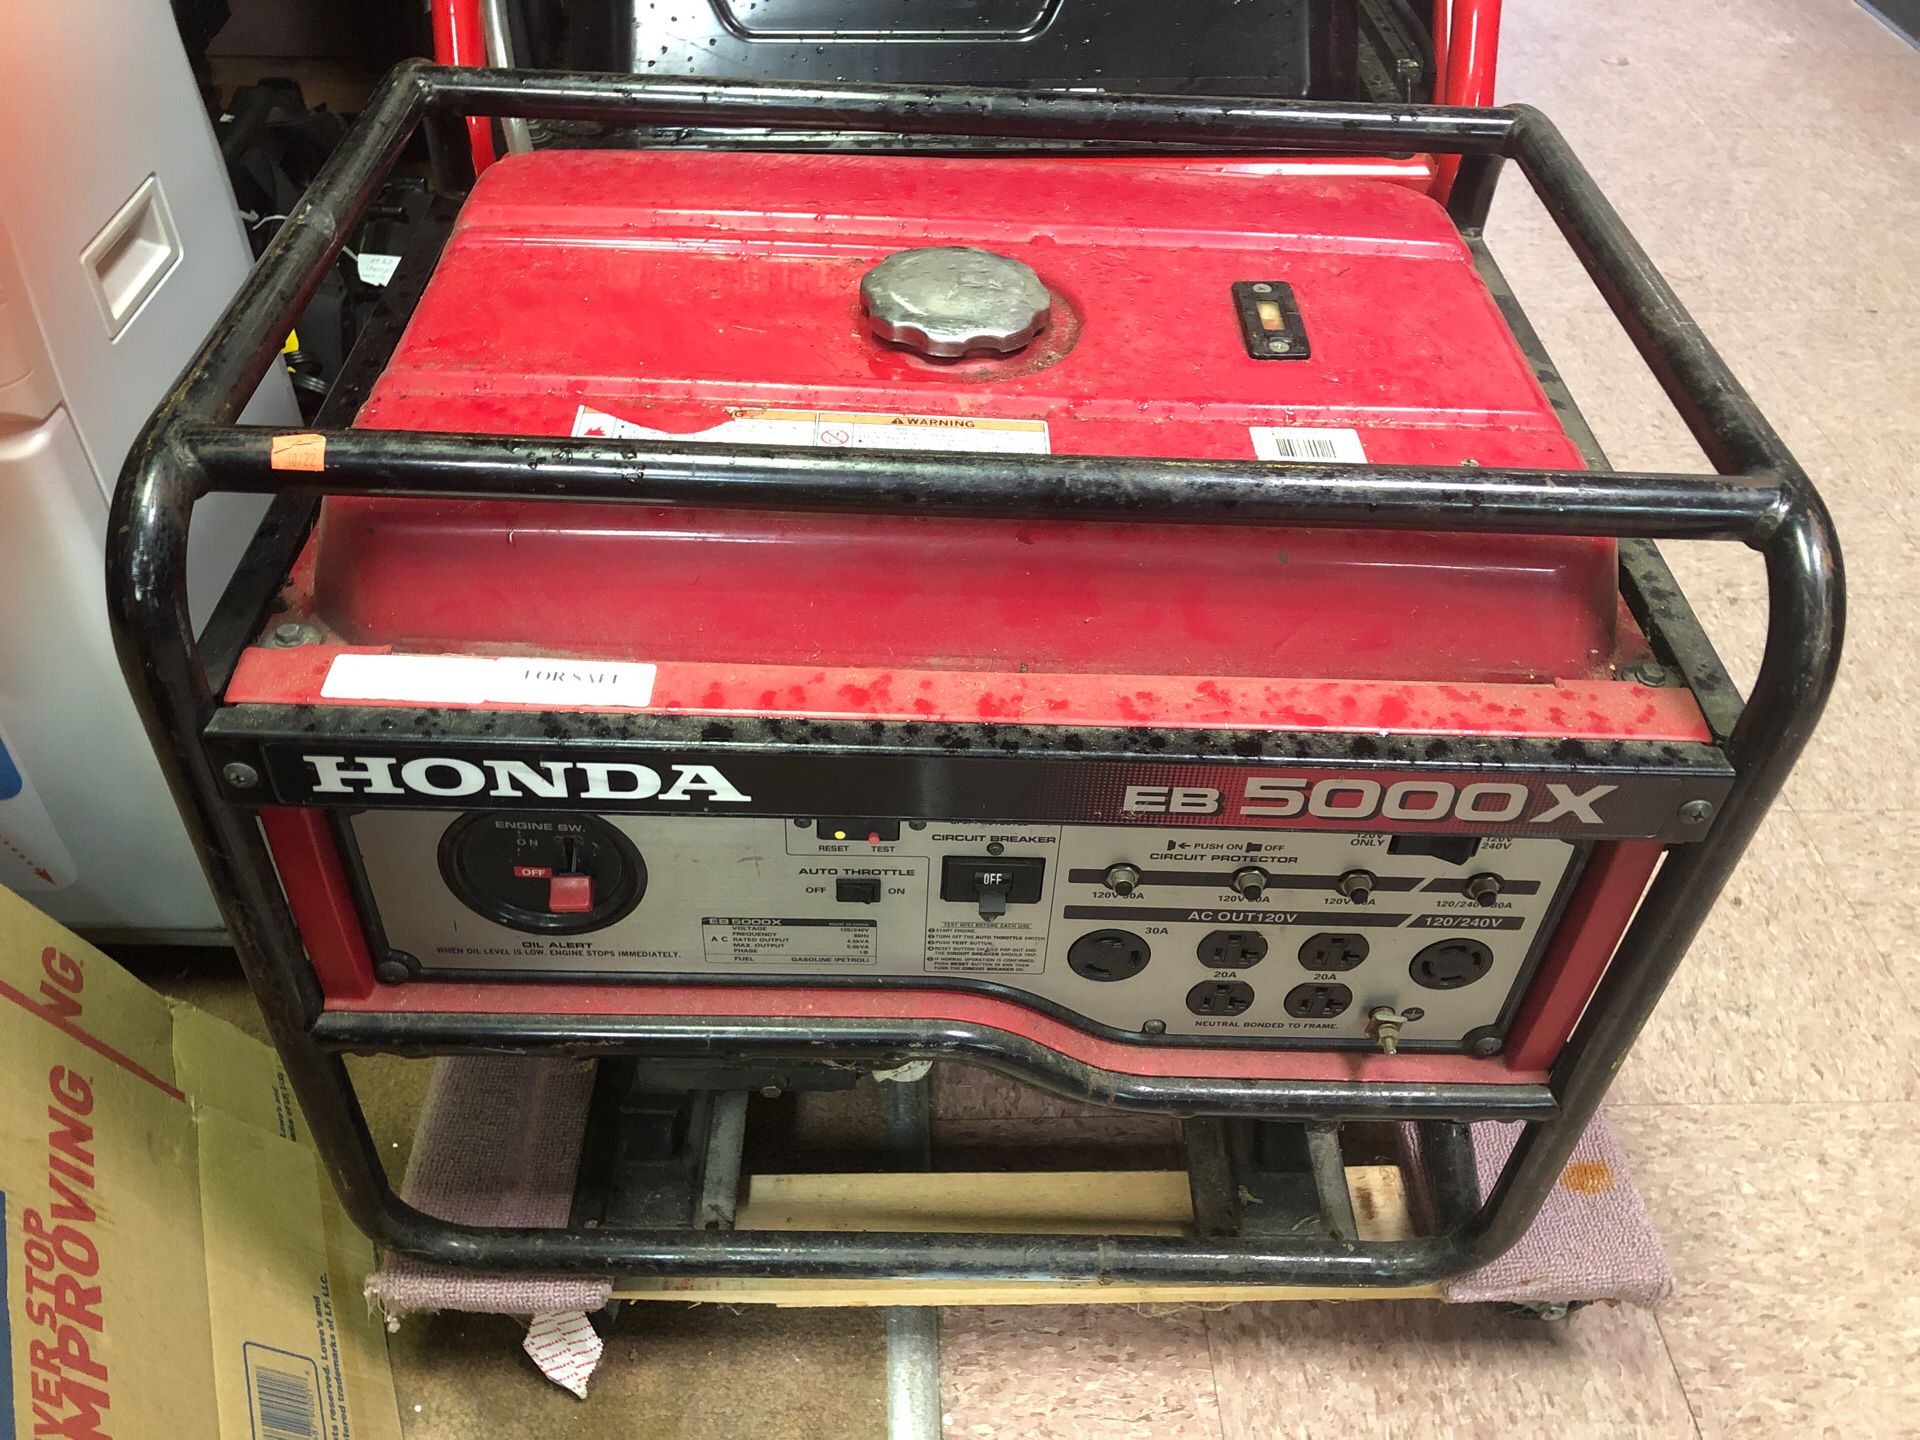 Honda generator 5000 Watt EB5000X